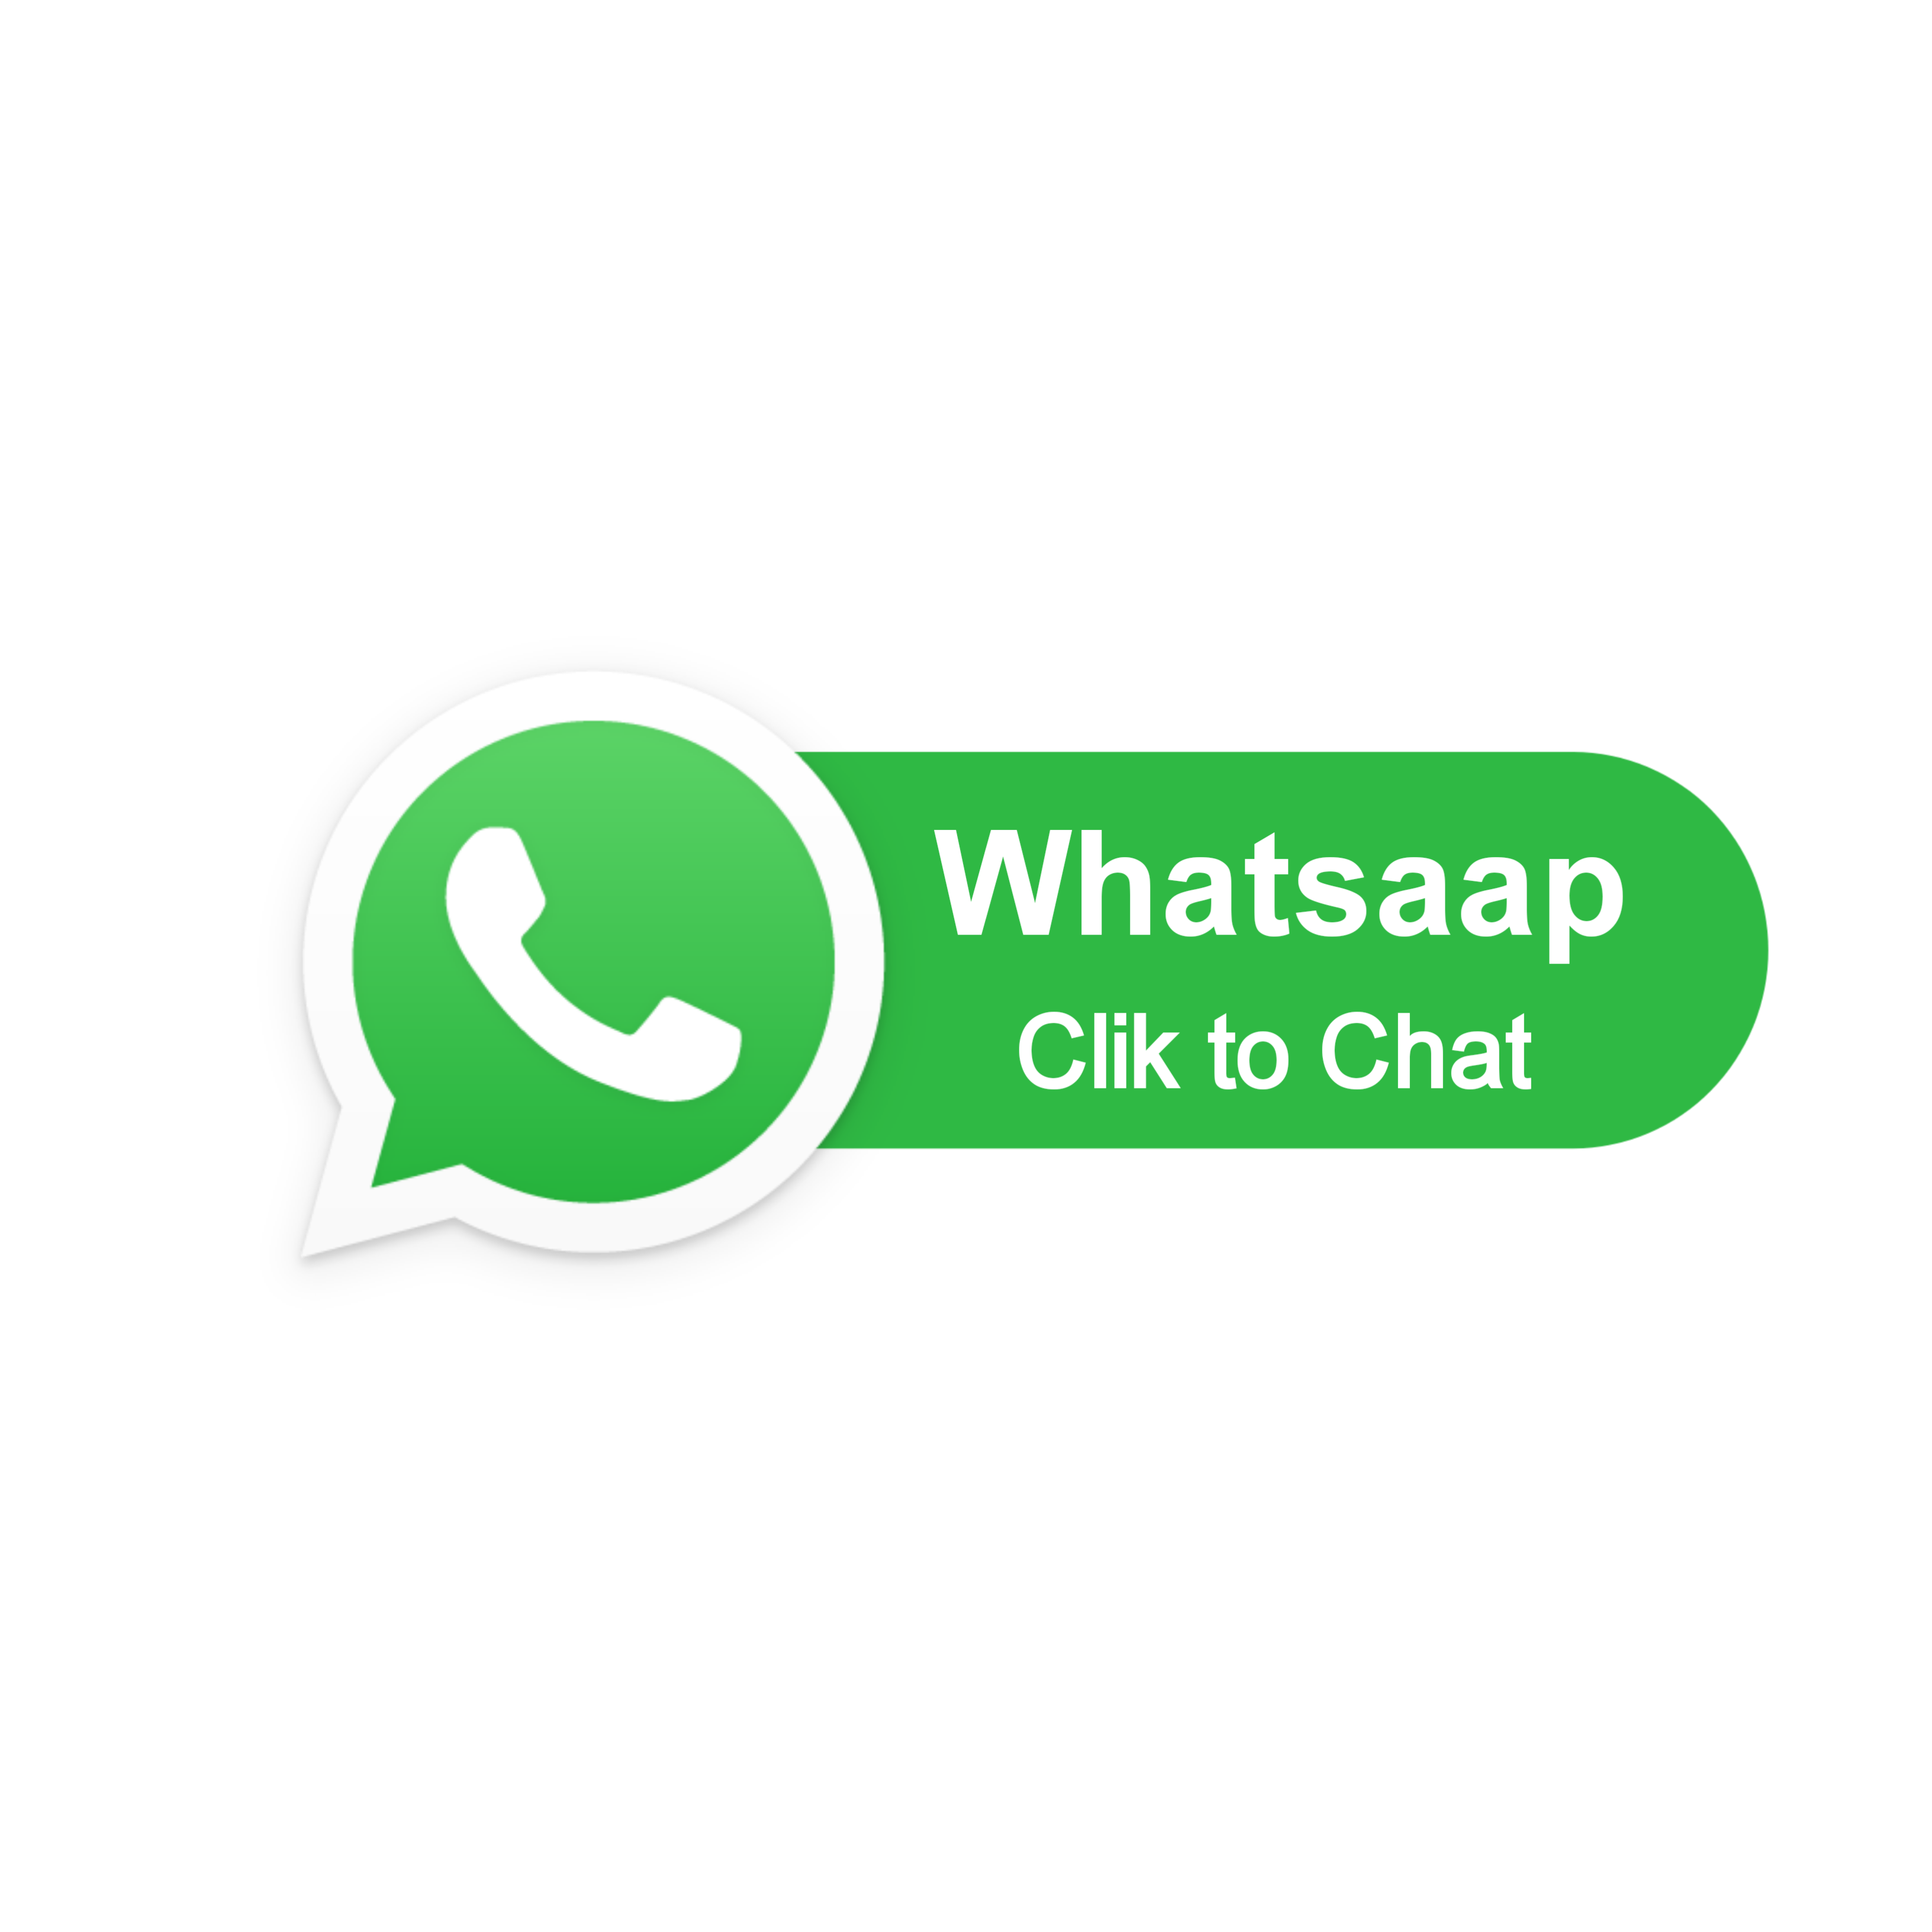 WhatsApp Now